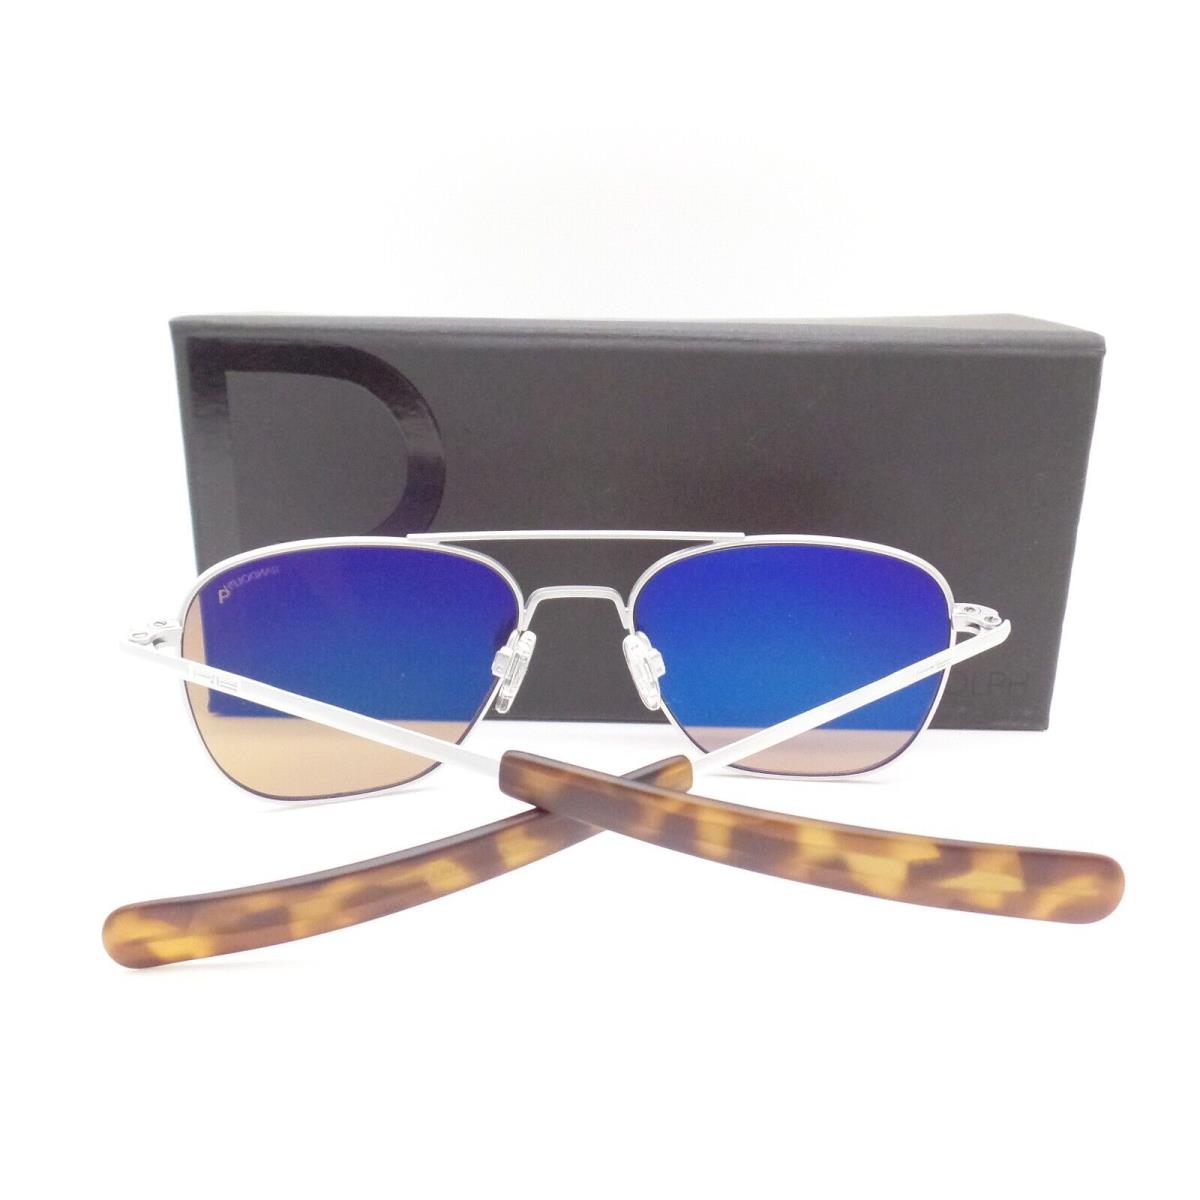 Randolph sunglasses  - Matte Chrome Frame, Northern Lights Lens